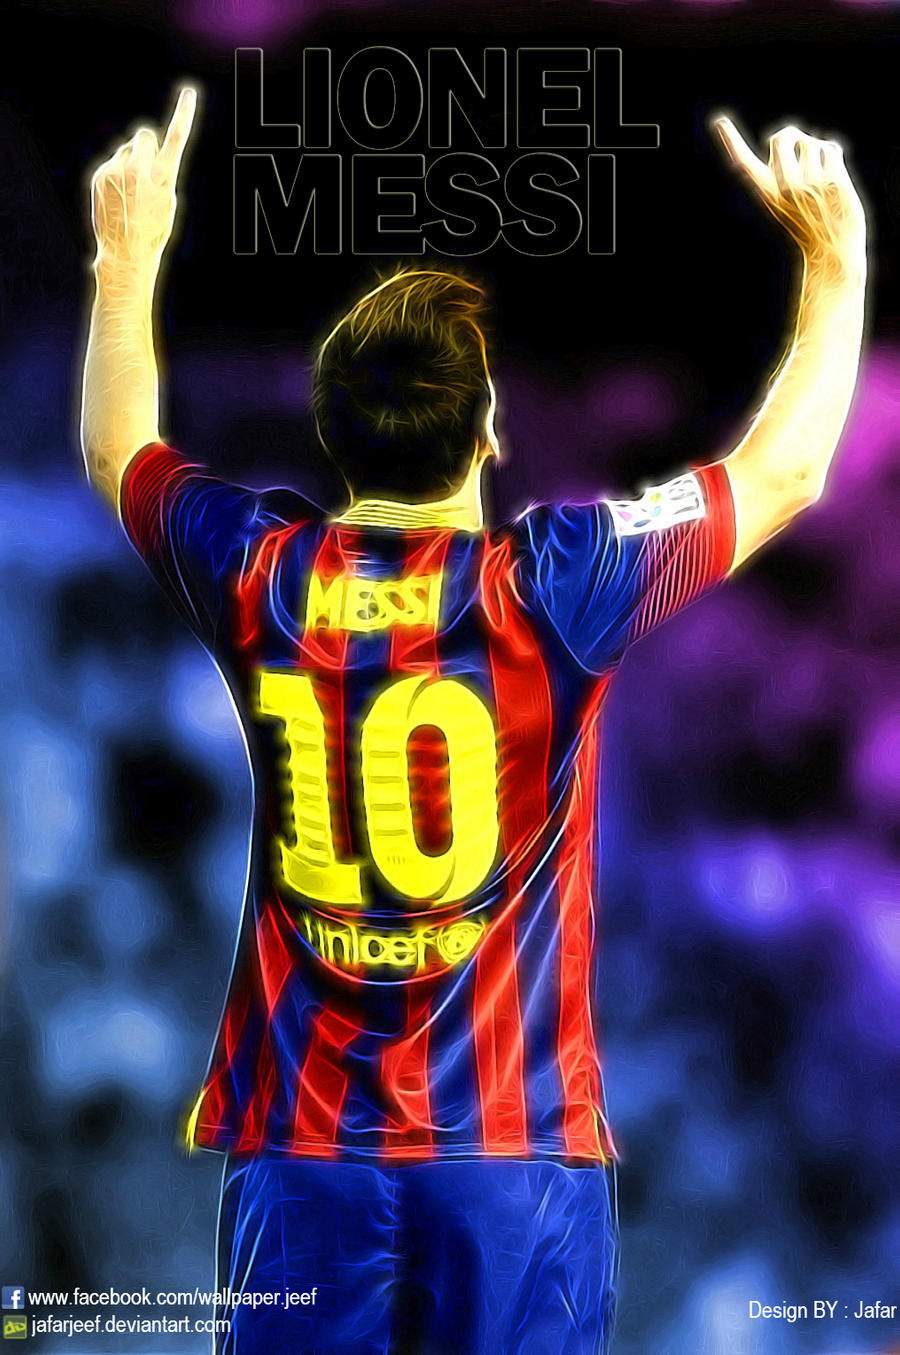 Lionel Messi FC Barcelona wallpaper by jafarjeef on DeviantArt